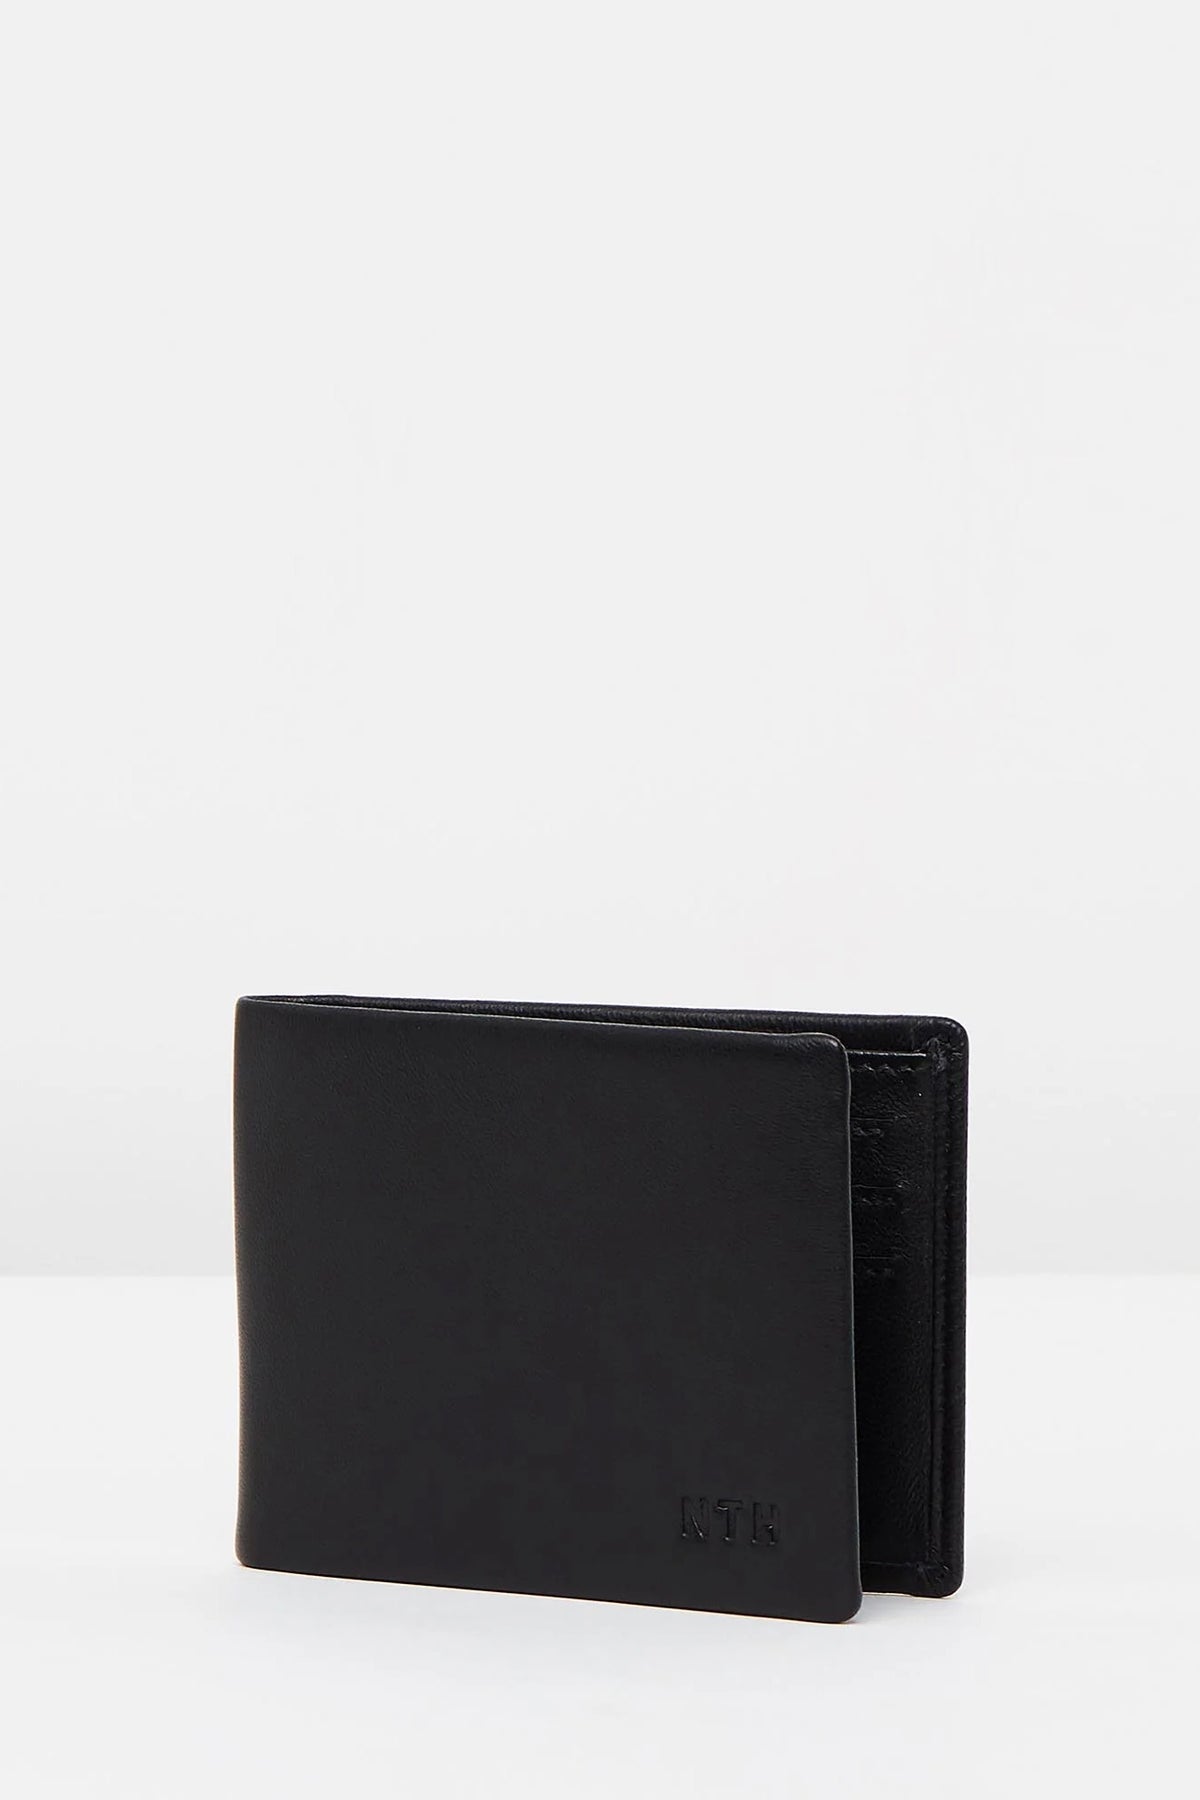 The Statesman Wallet Leather Black